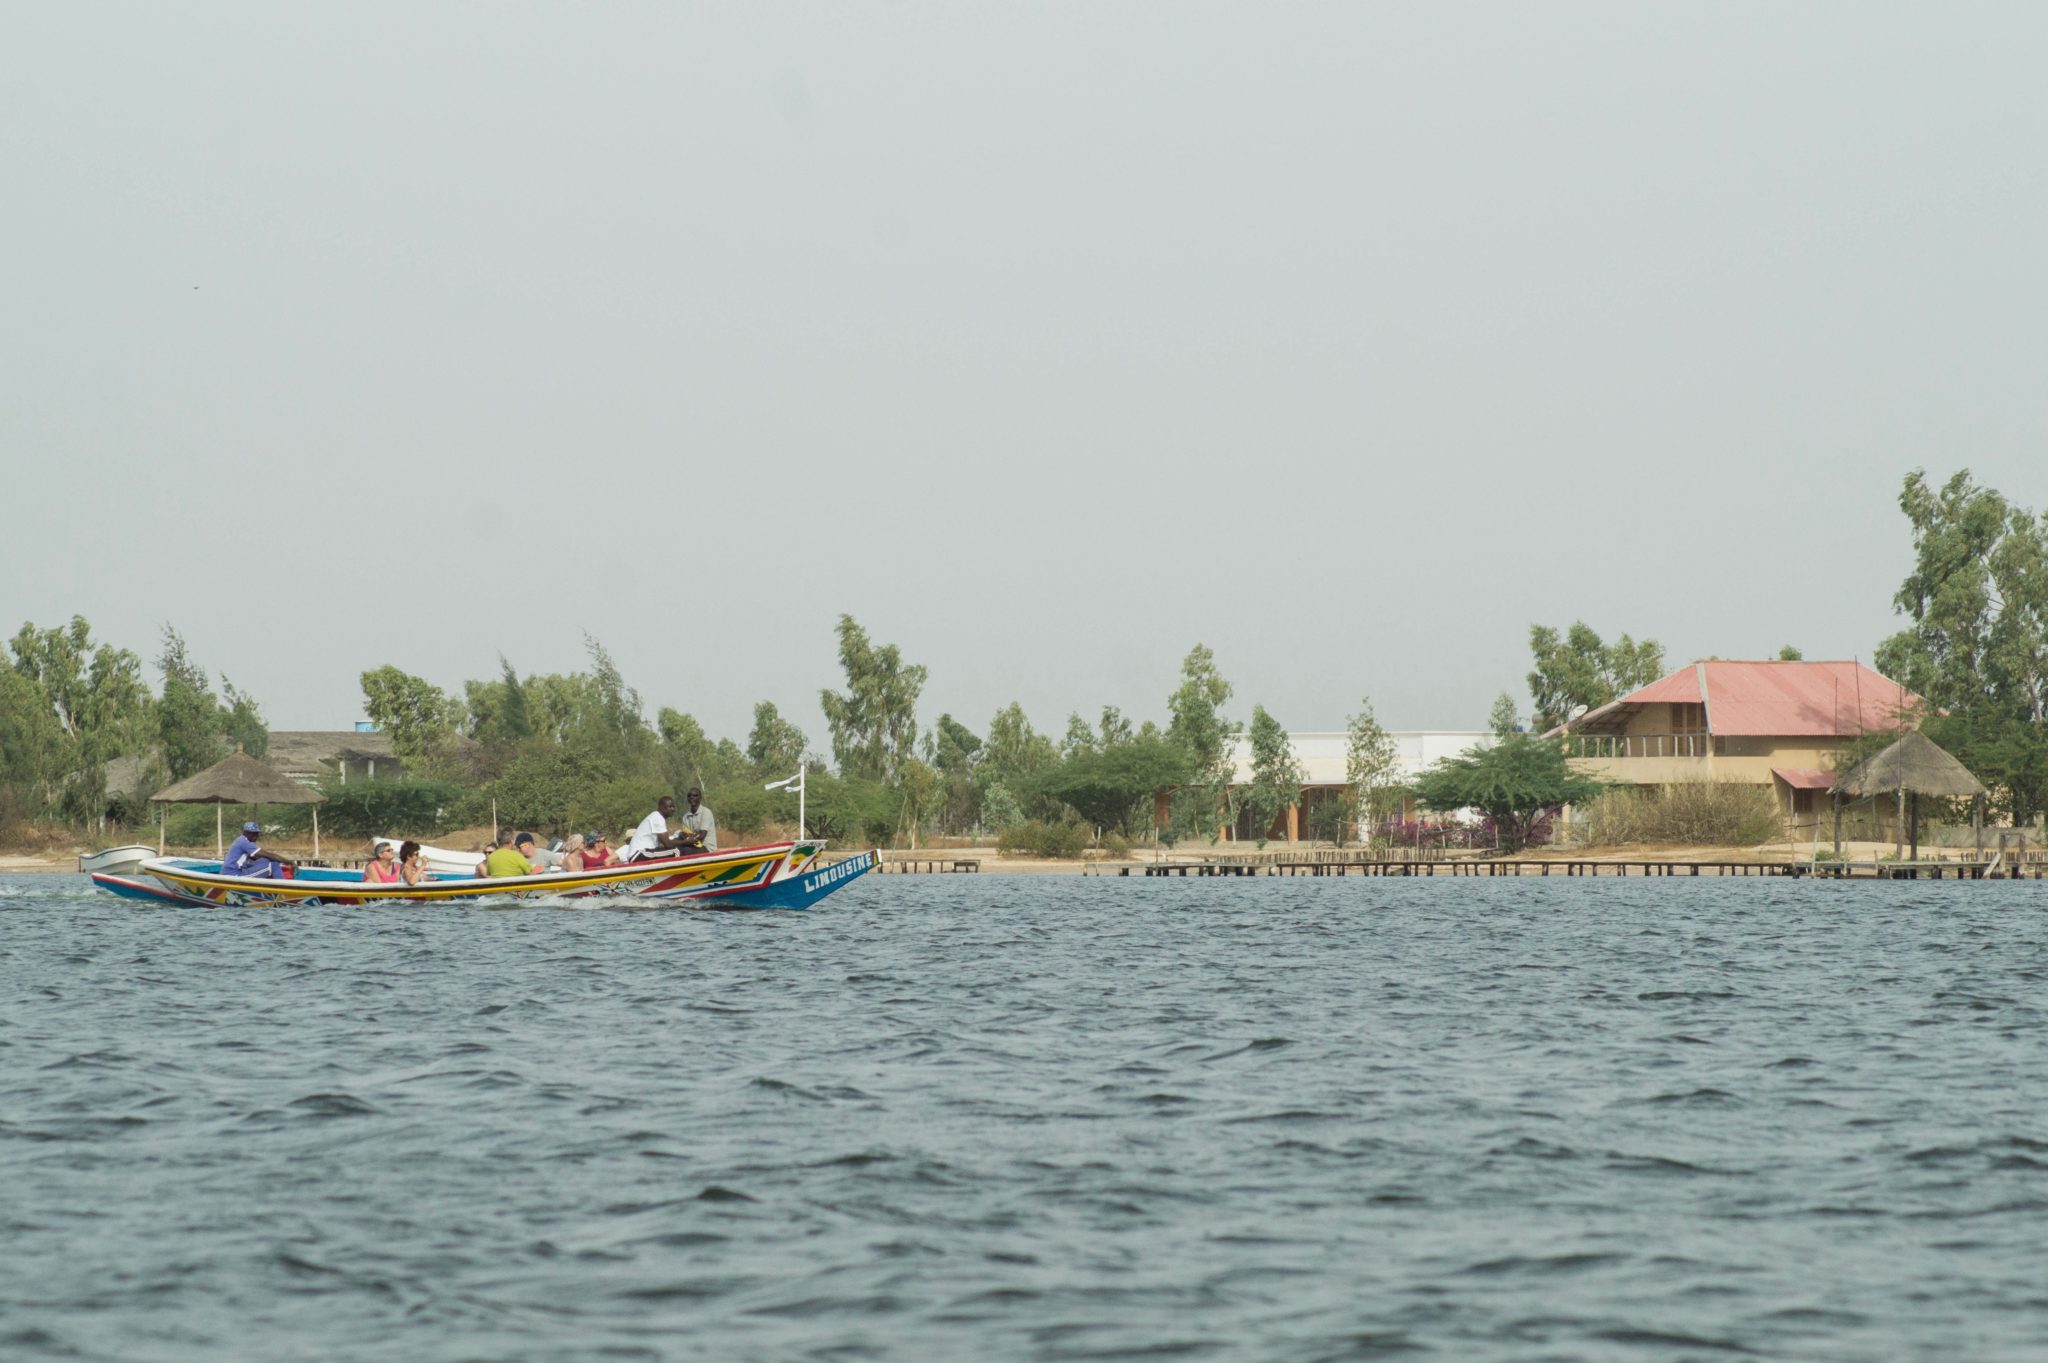 Touristen auf der Piroge in Richtung Le Bazouk du Saloum im Sine Saloum Senegal